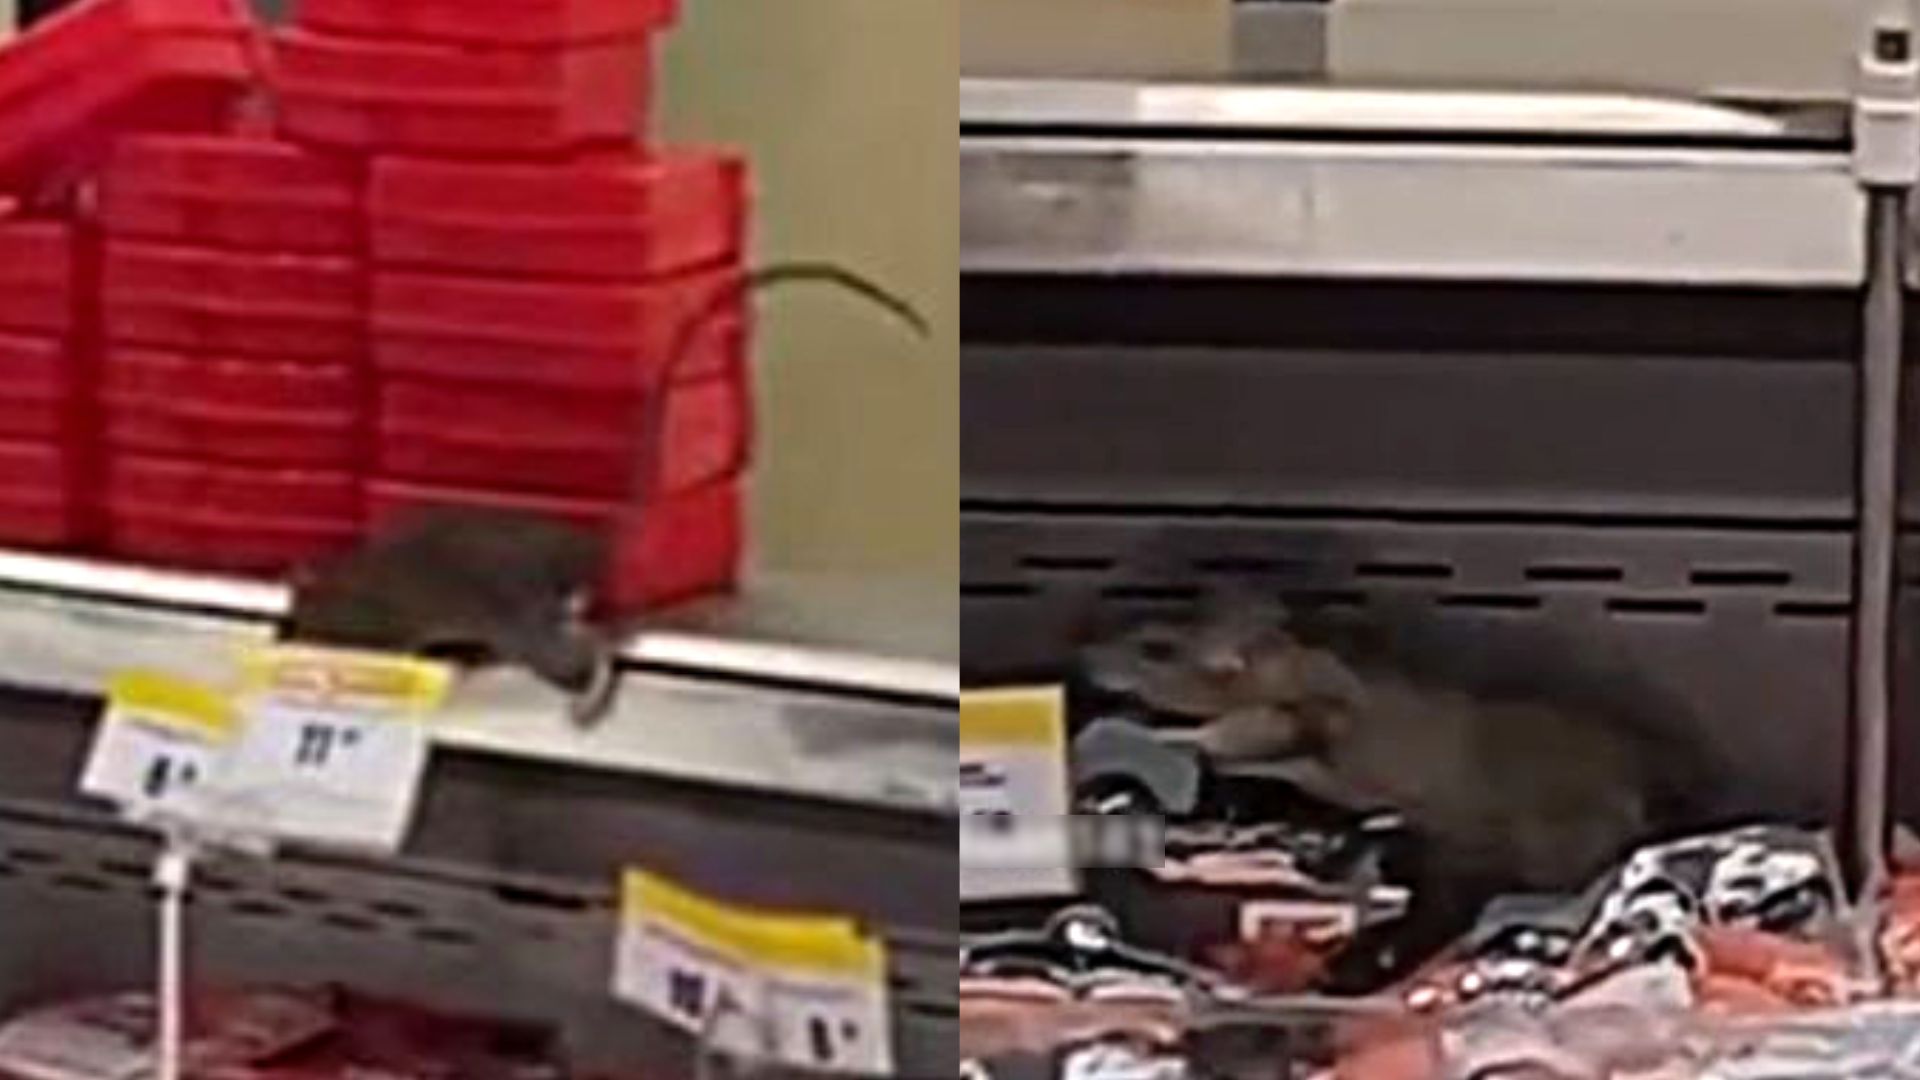 Graban a dos ratas gigantes en Metro y clientes piden que las autoridades se pronuncien. The video went viral on various social networks.  (capture)